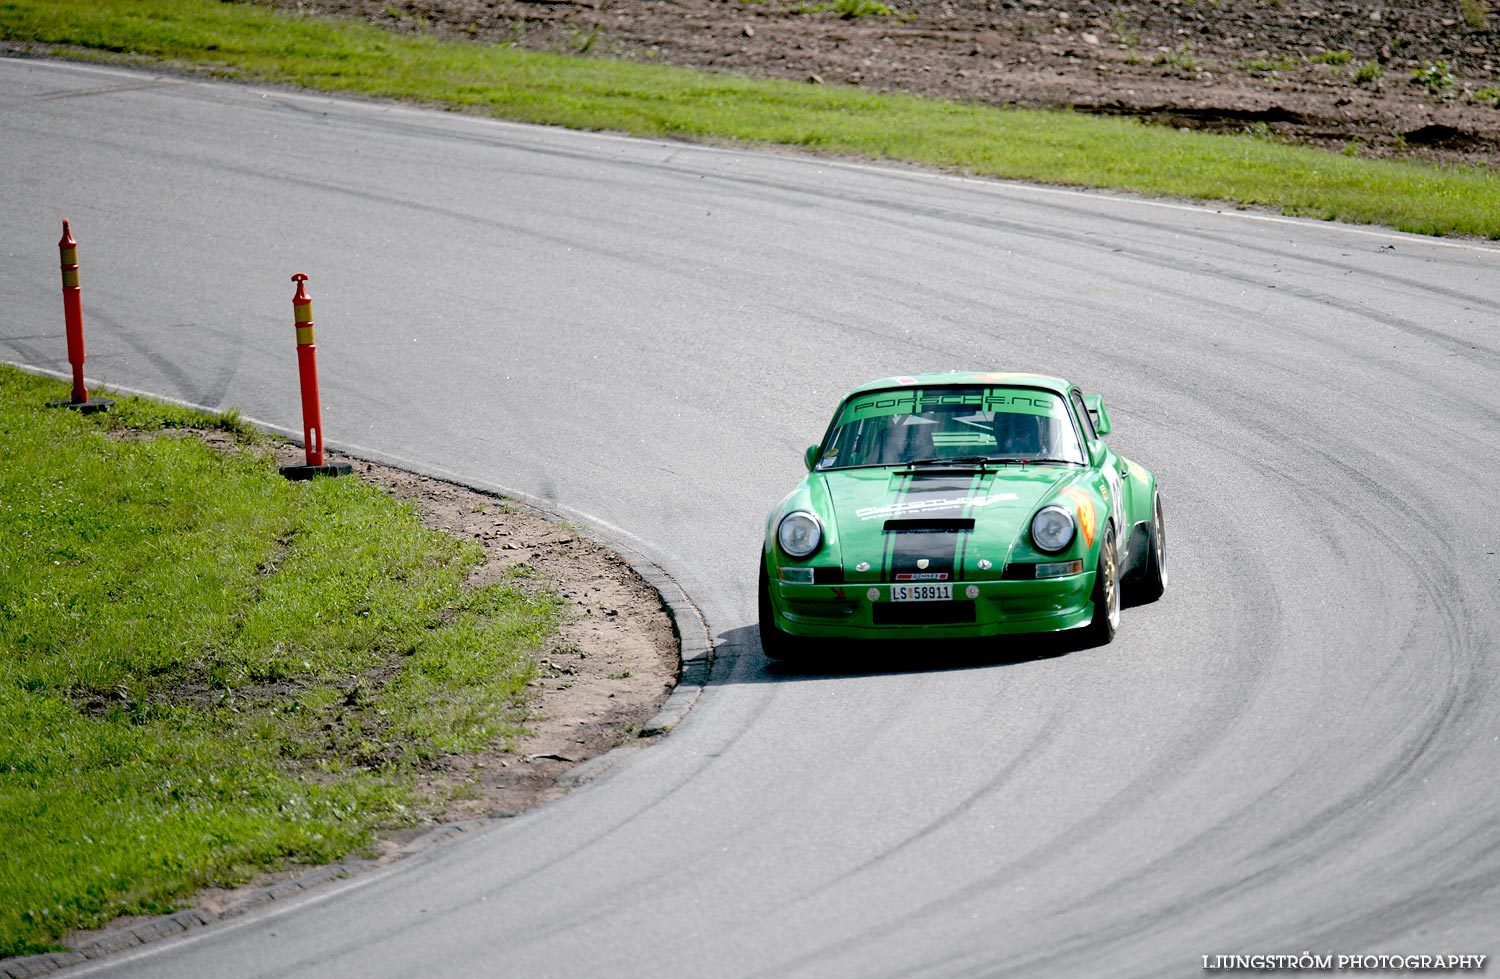 SSK Raceweek,mix,Kinnekulle Ring,Götene,Sverige,Motorsport,,2009,107525